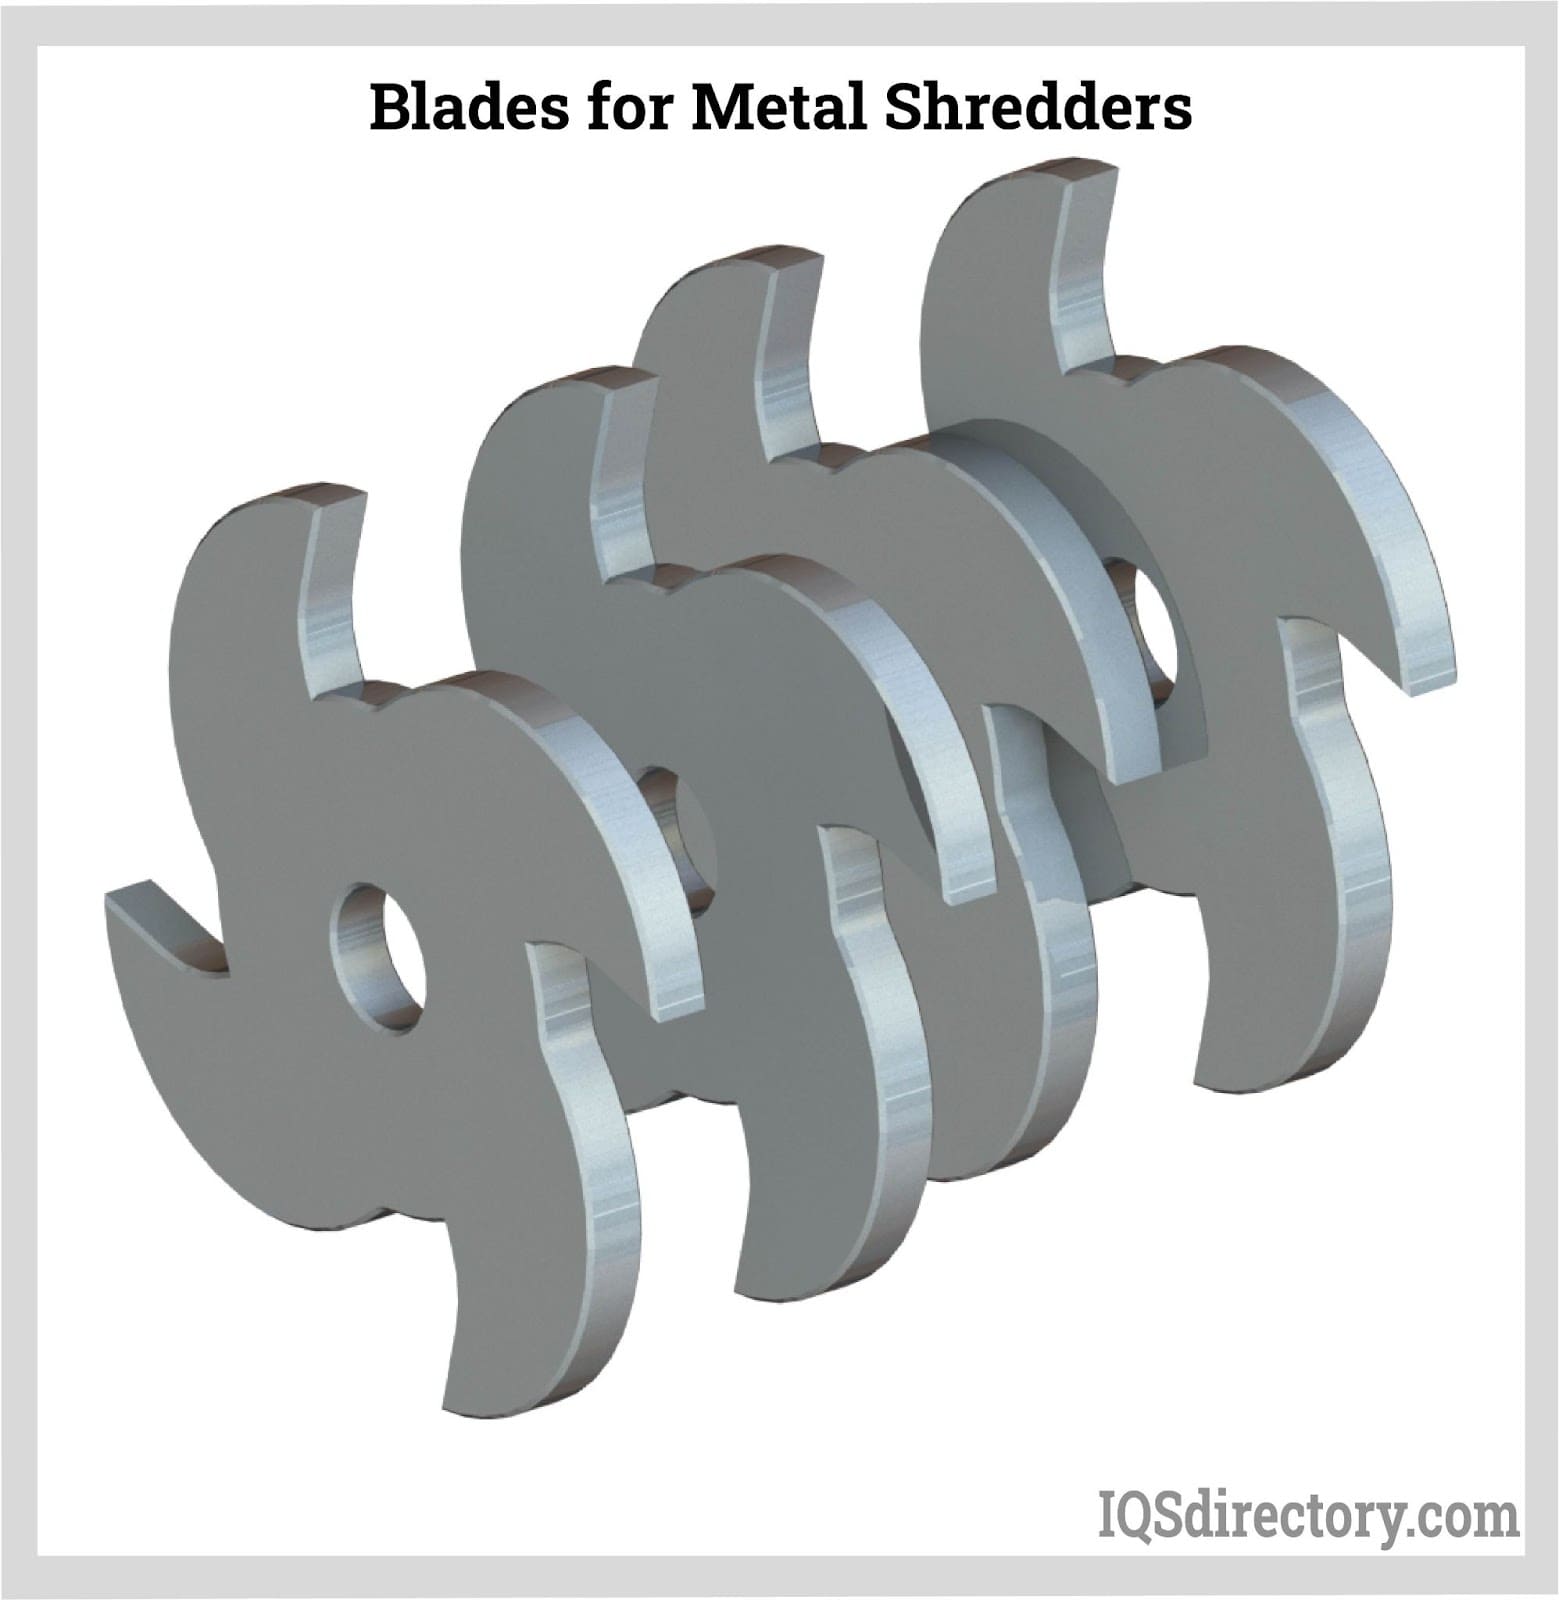 Blades for Metal Shredders